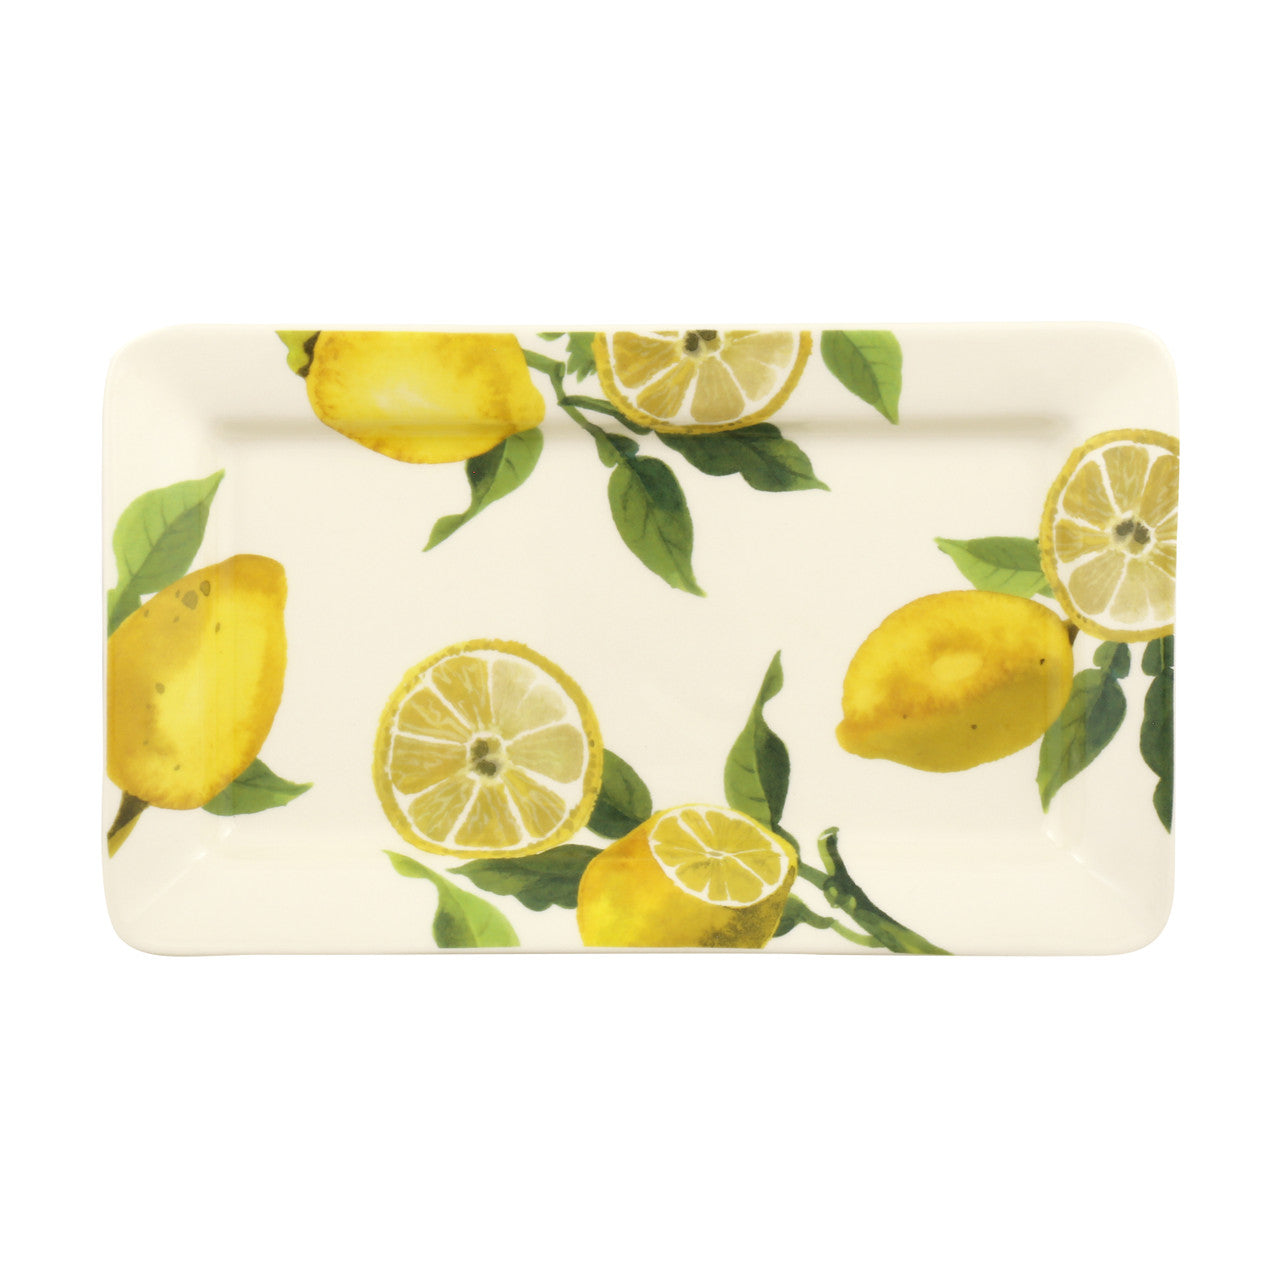 Emma Bridgewater Lemons Medium Oblong Plate.